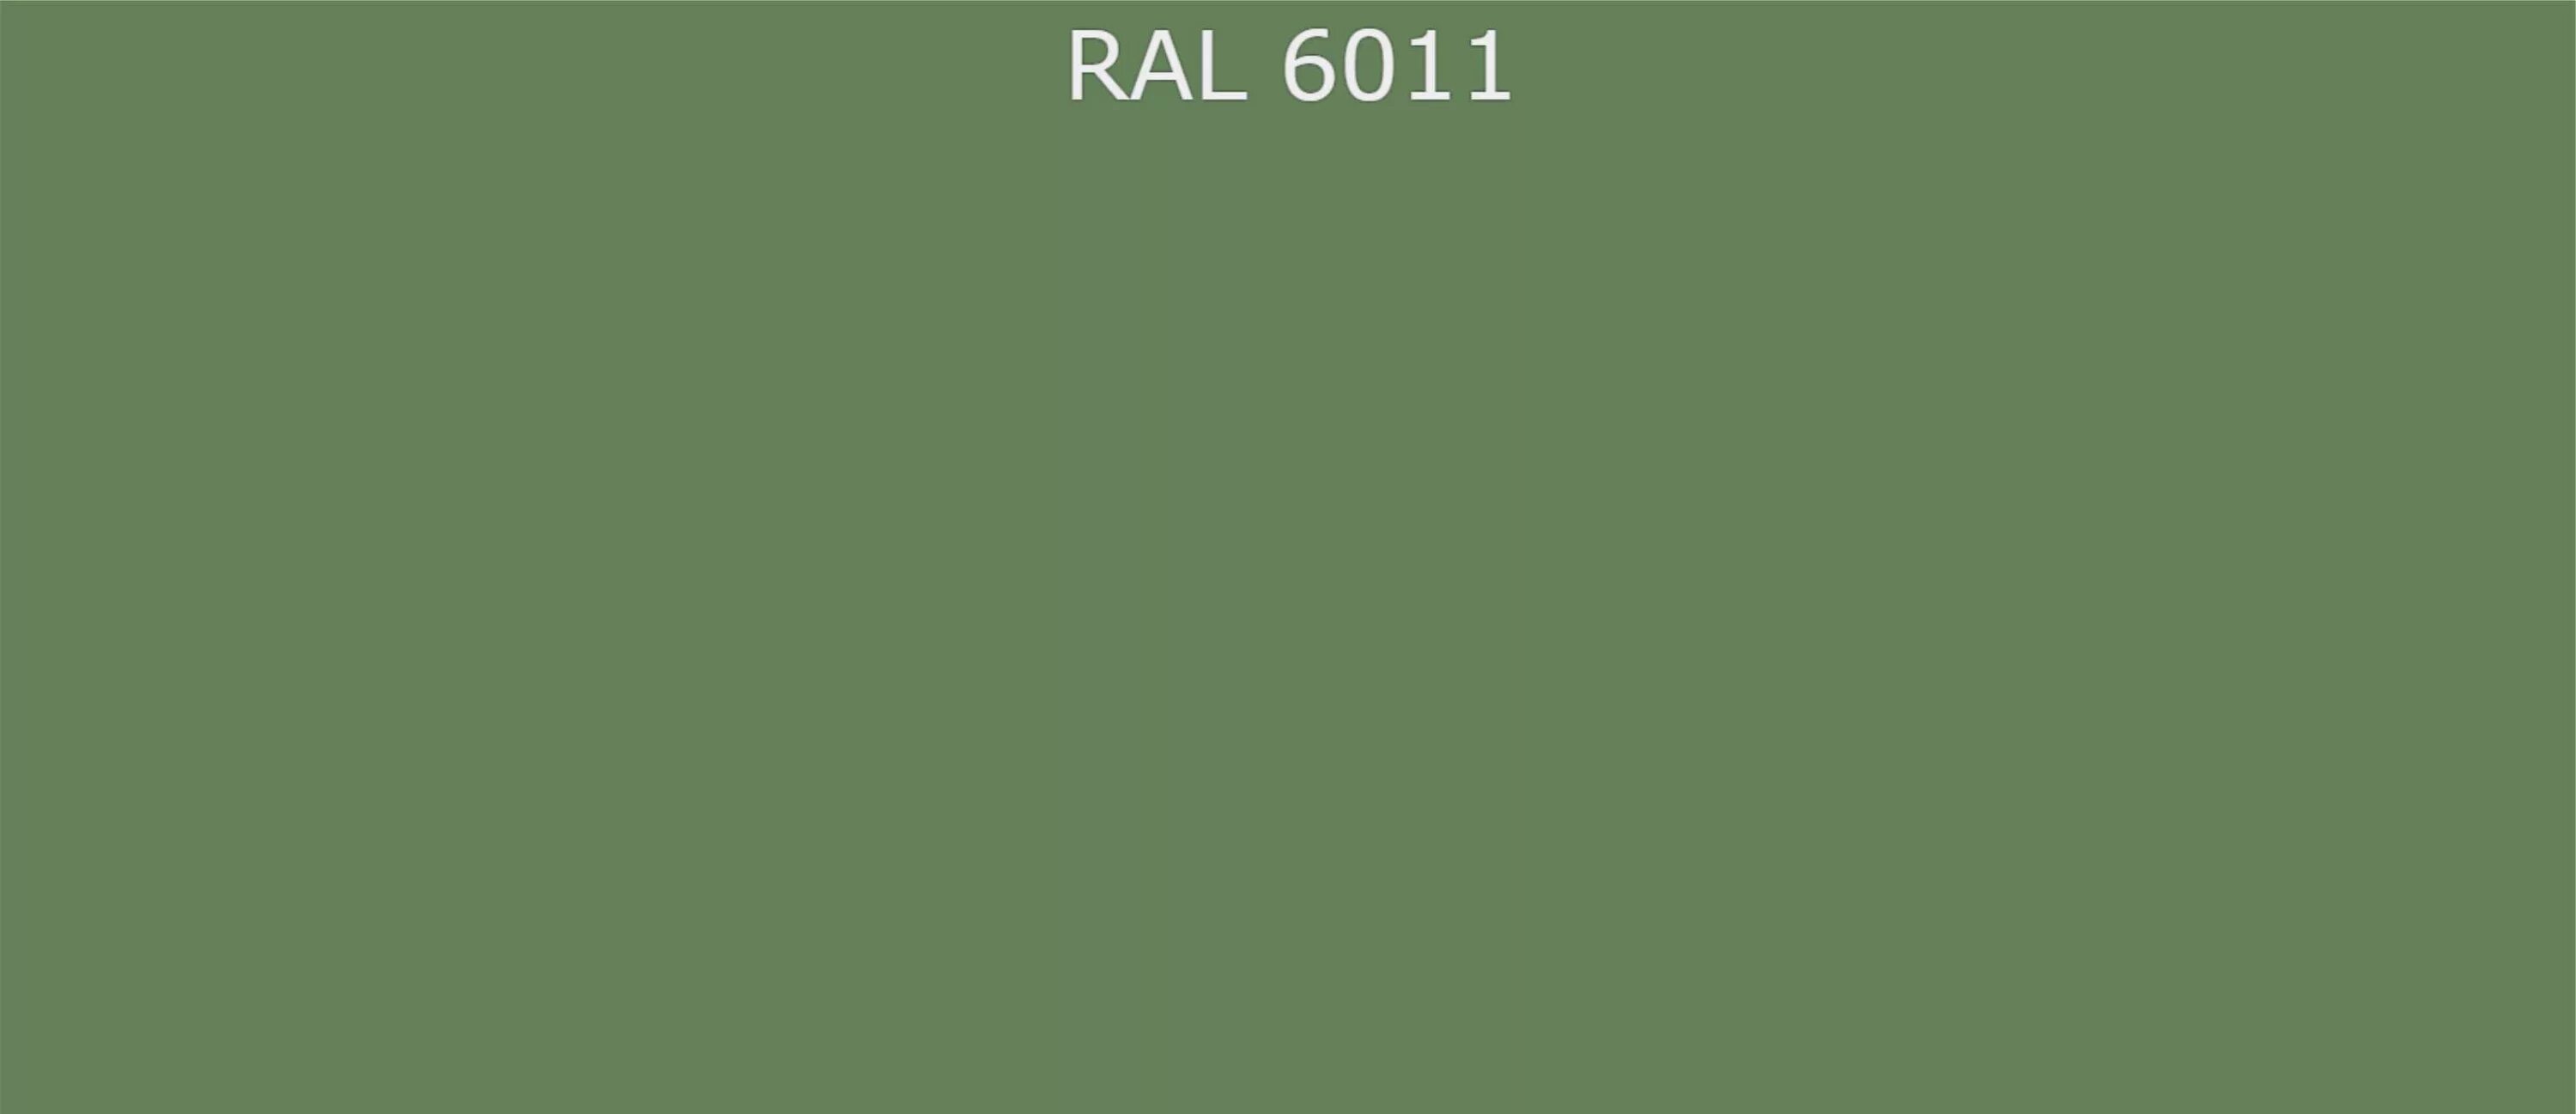 RAL 6011 цвет. RAL 6011 краска. Палитра RAL 6011 Резедово зеленый. RAL 6011 Резедово-зелёный.